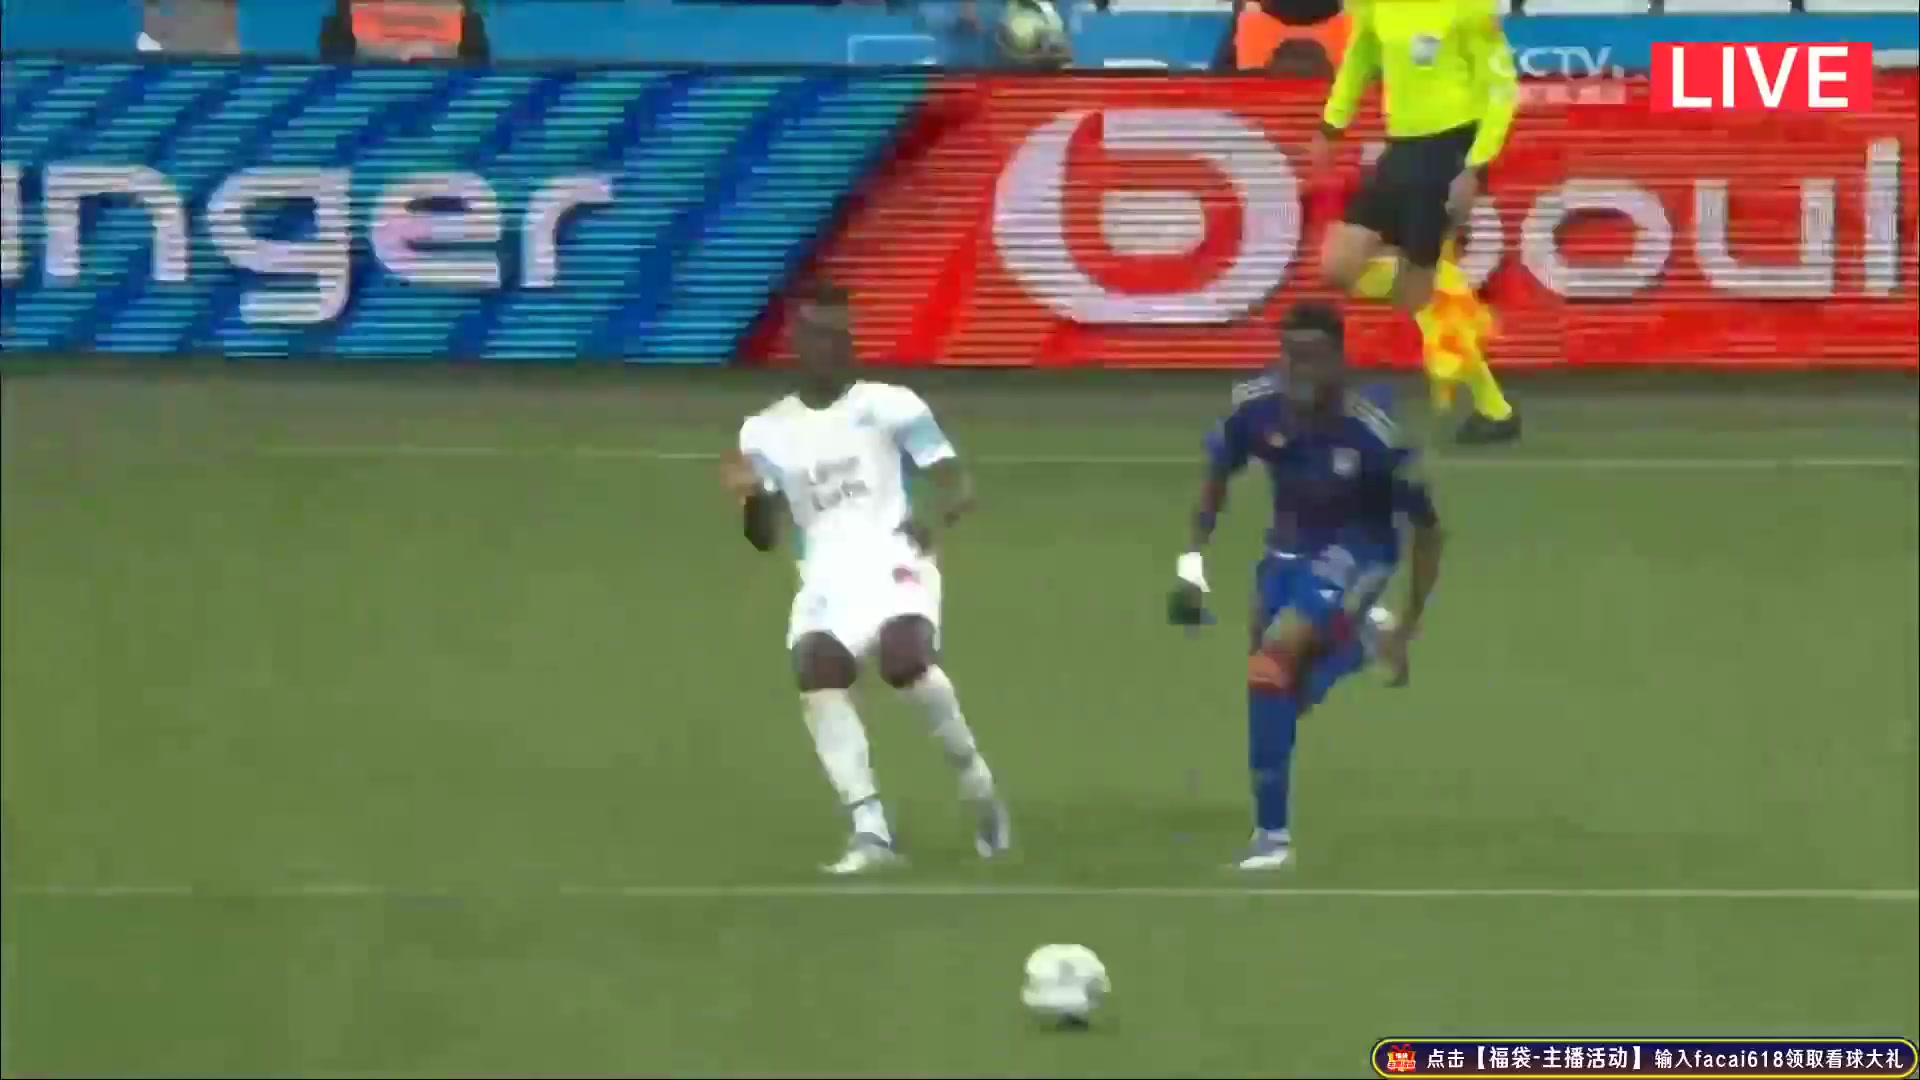 Ligue1 Marseille Vs Lyon  Goal in 88 min, Score 0:3